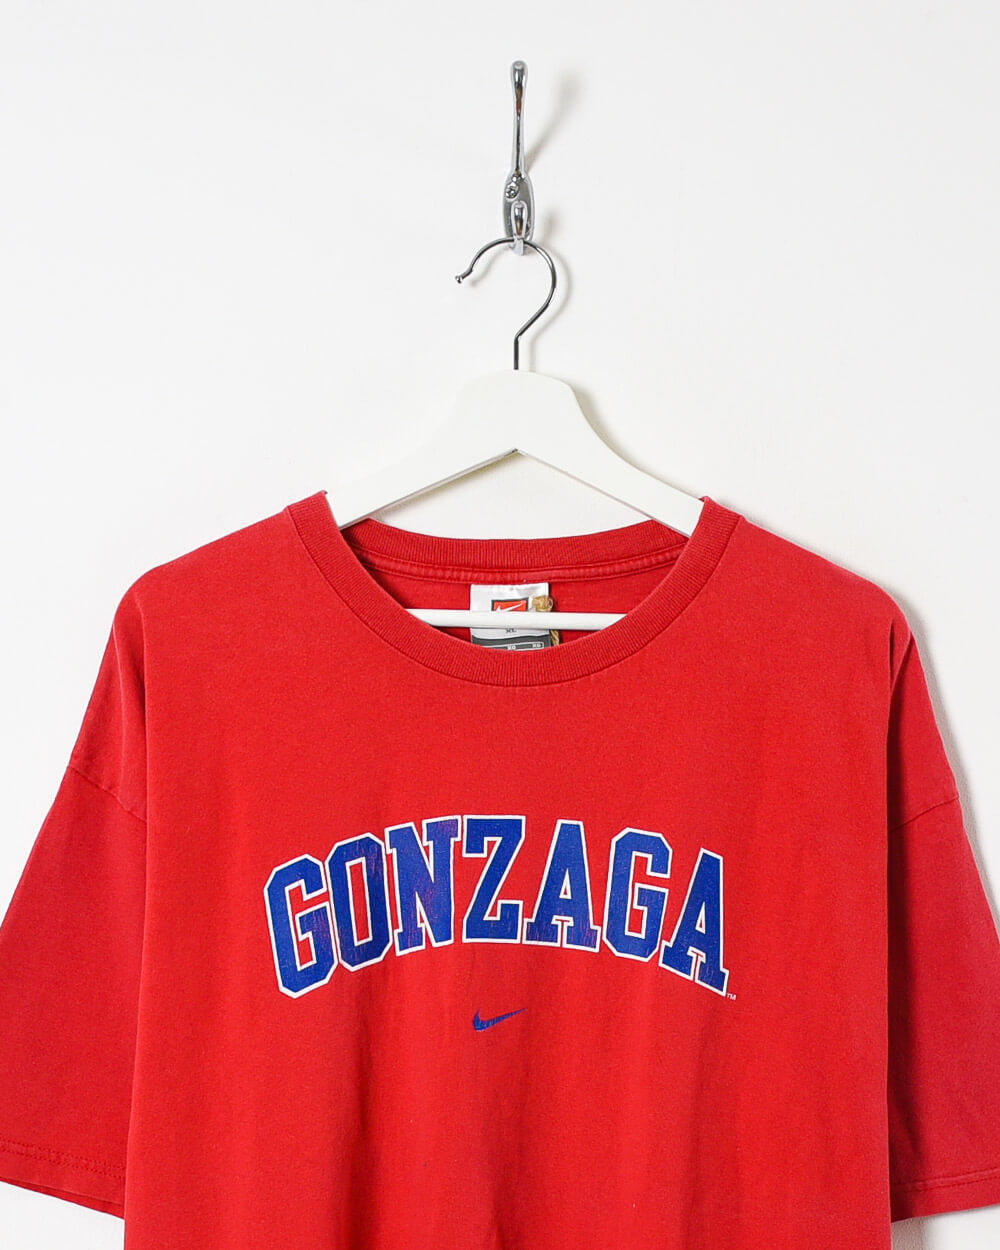 Red Nike Team Gonzaga T-Shirt - X-Large